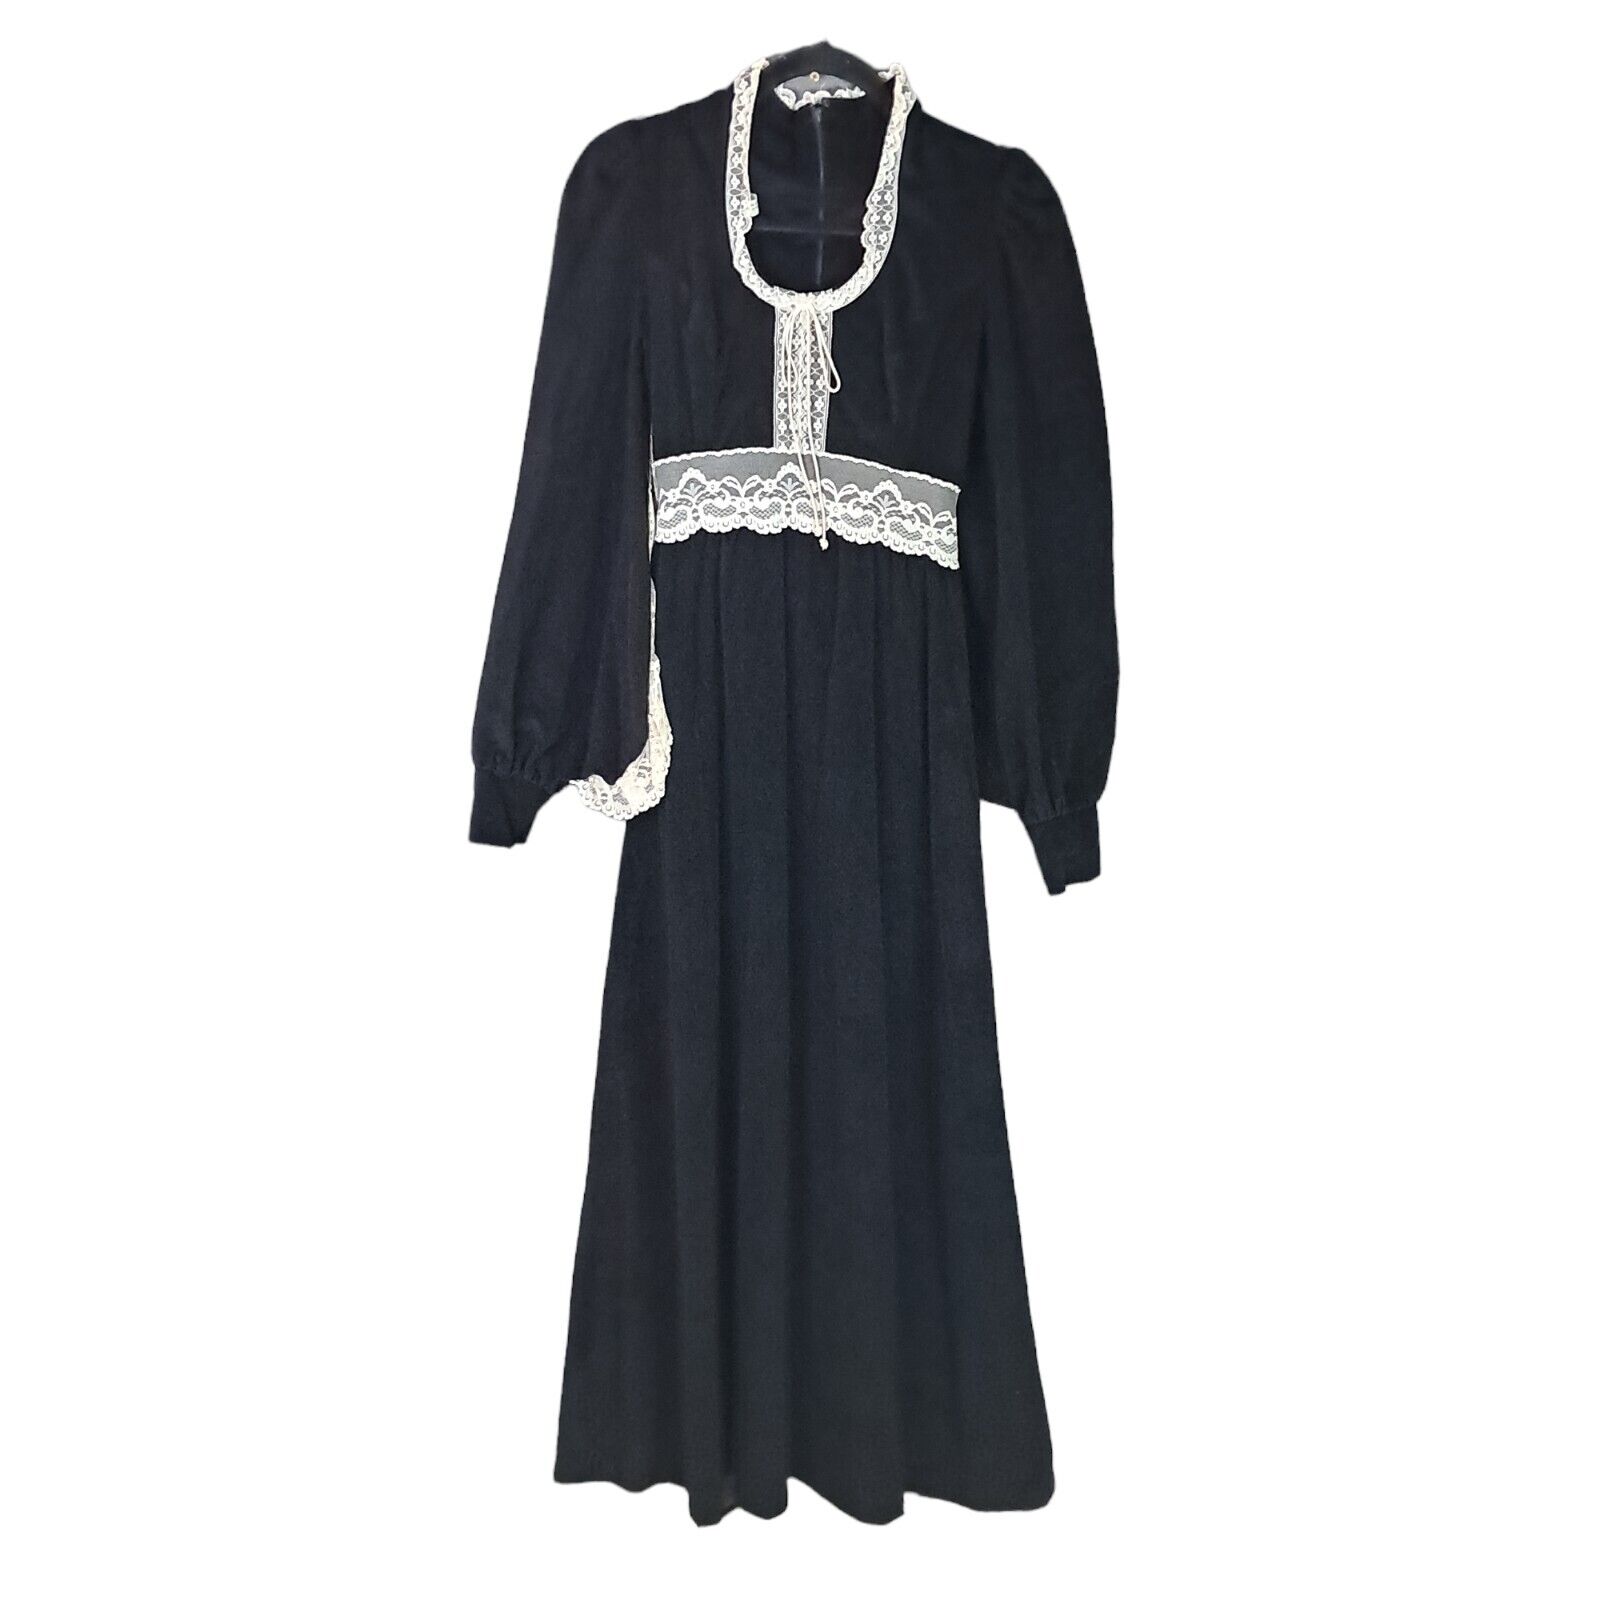 Vintage 70s Maxi Dress Boho Renaissance Fairy Festival Peasant Bell Sleeve Lace